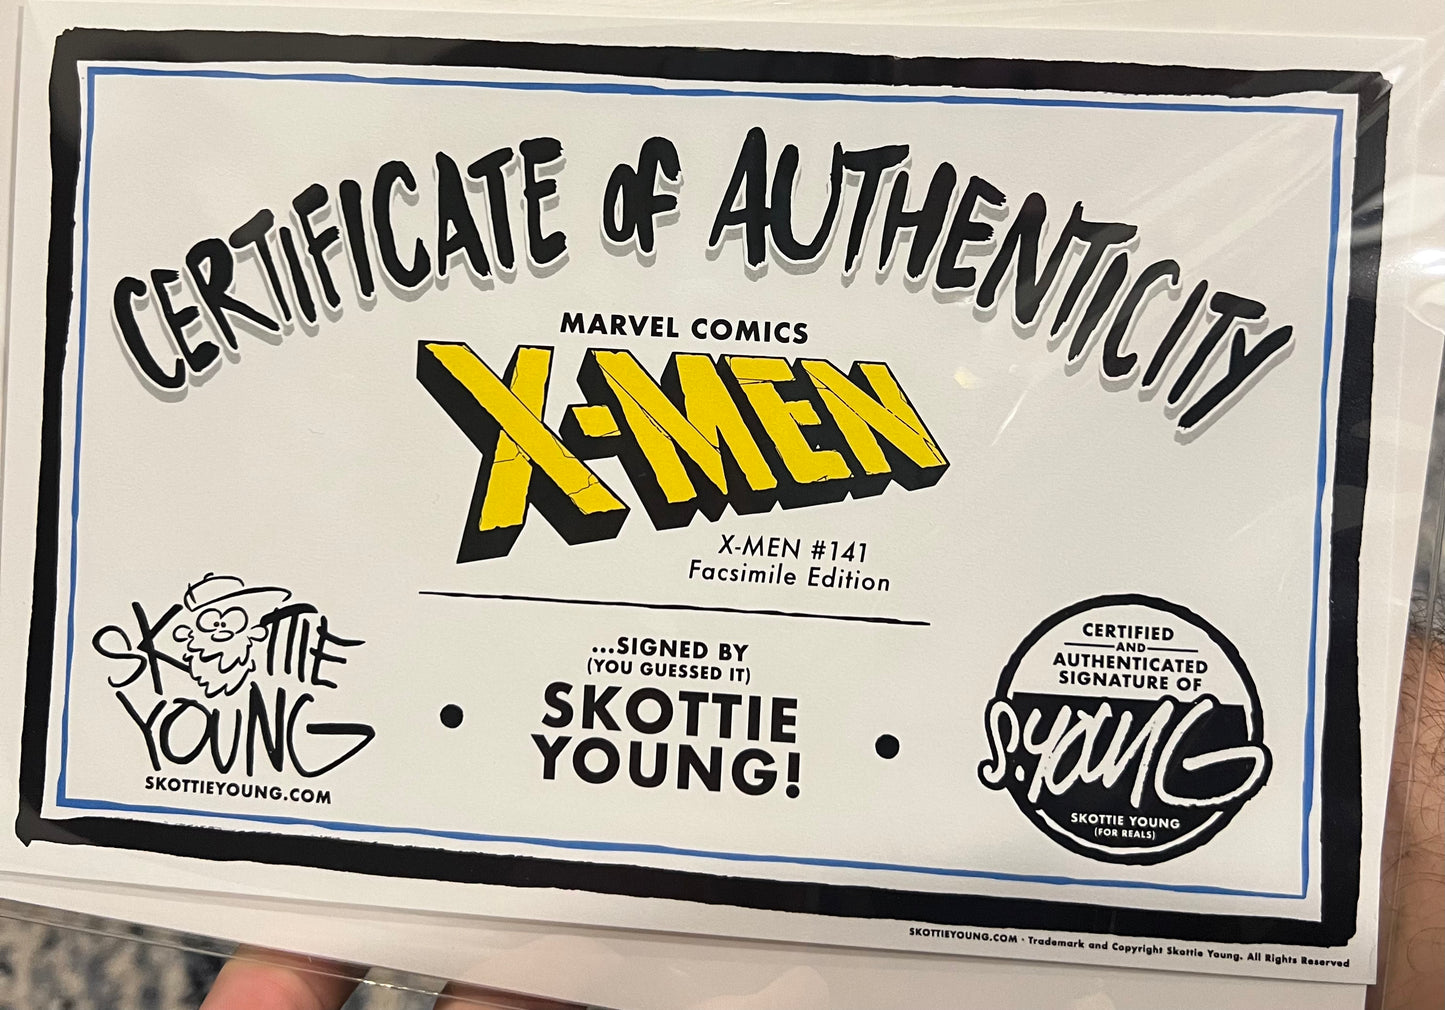 Uncanny X-Men #141 Facsimile Variant by Skottie Young (signed by Skottie) Marvel